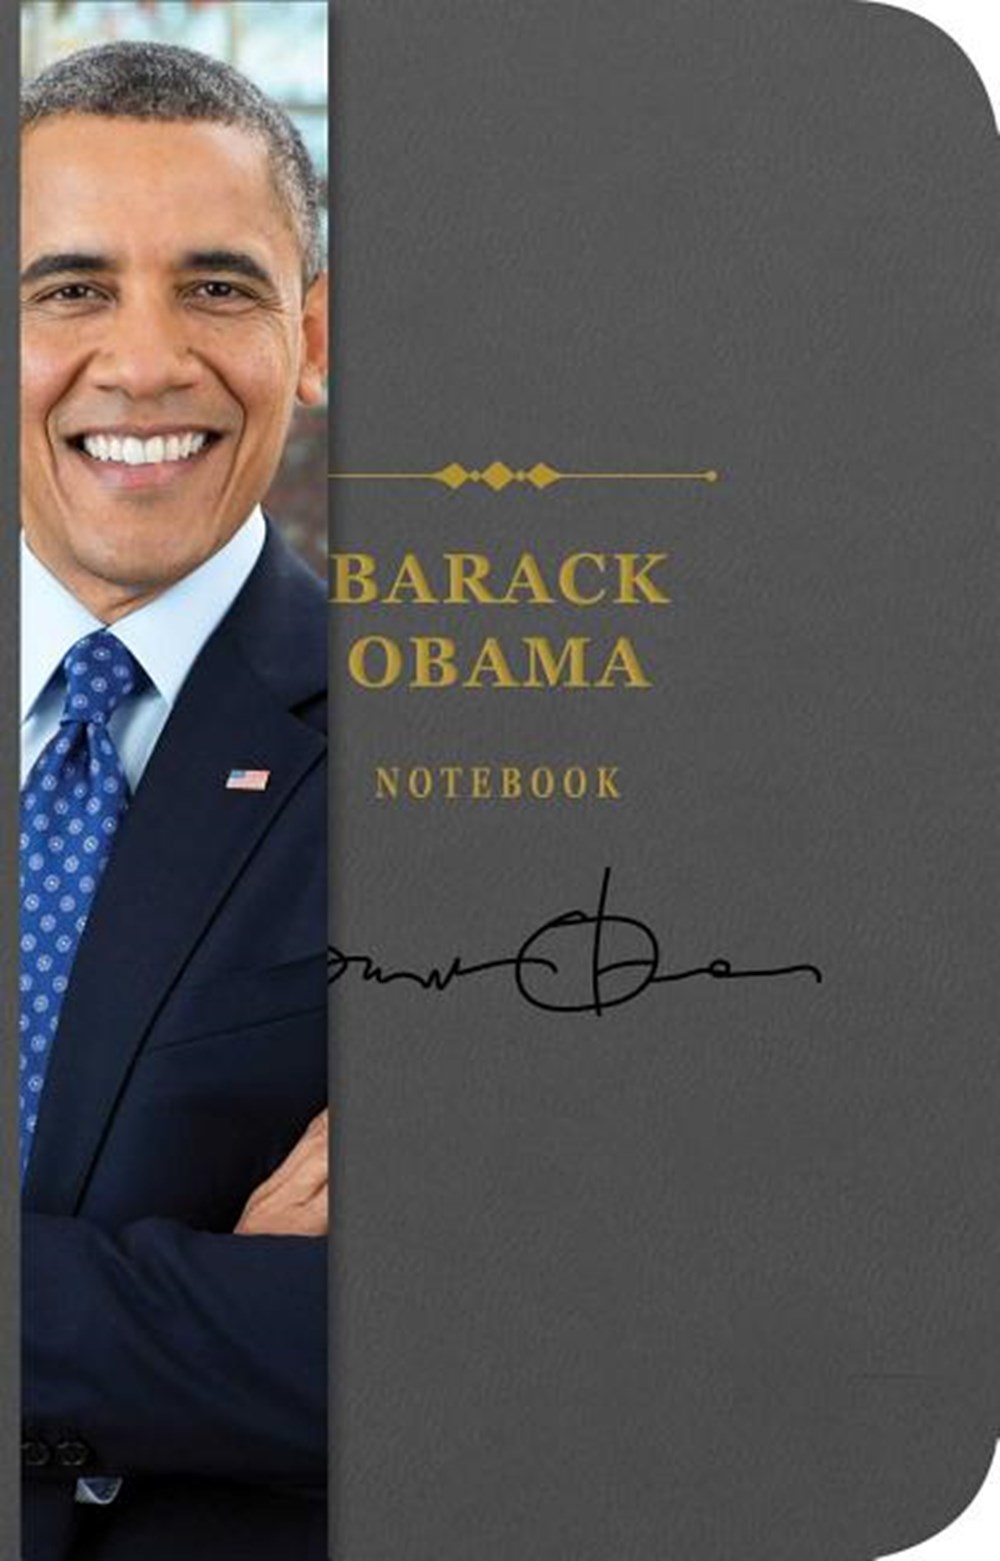 Barack Obama Signature Notebook: An Inspiring Notebook for Curious Minds